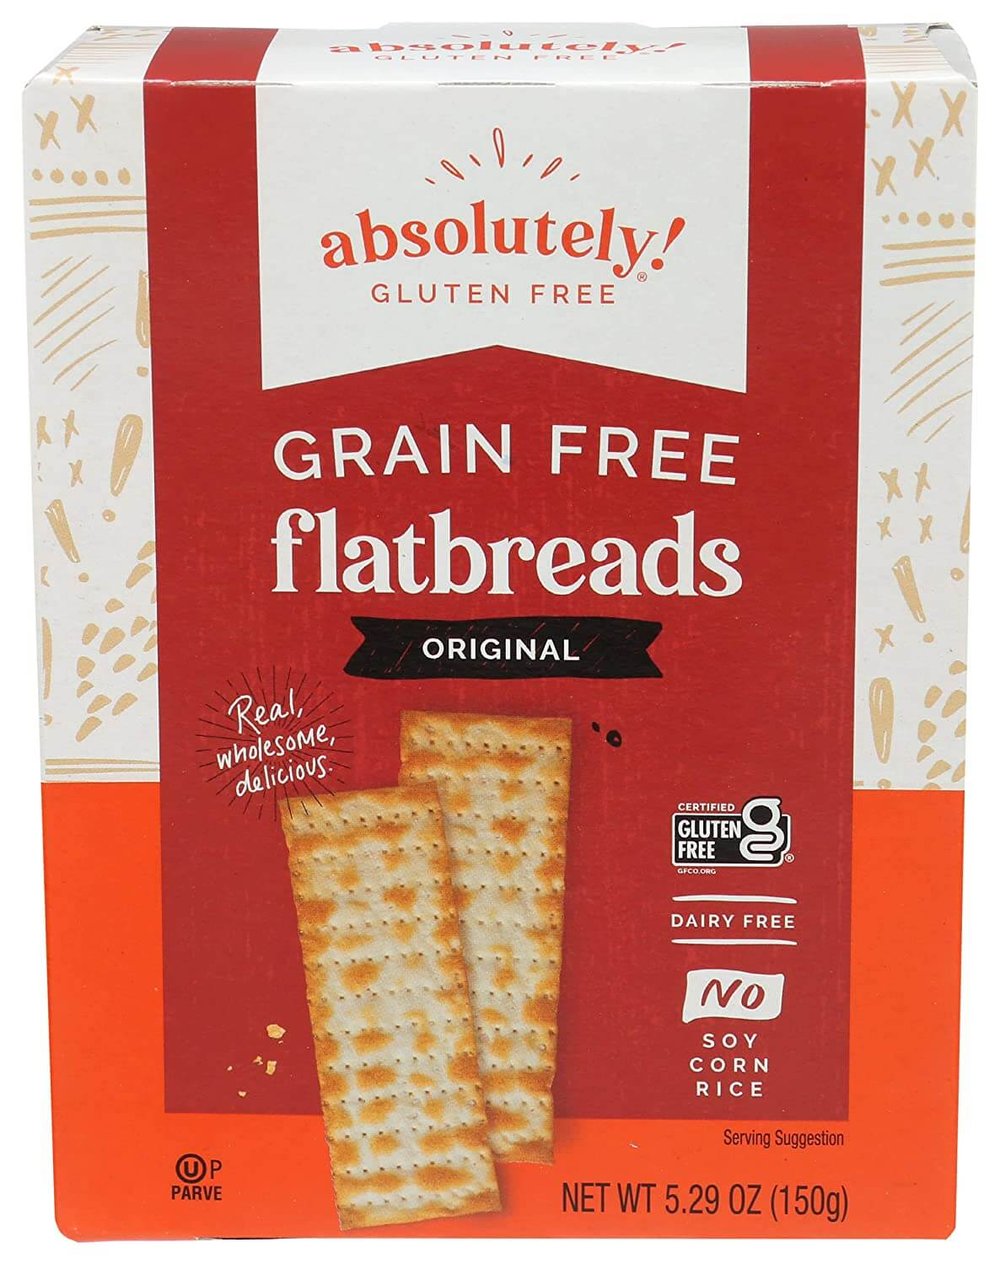 Absolutely gluten free gluten free flatbreads